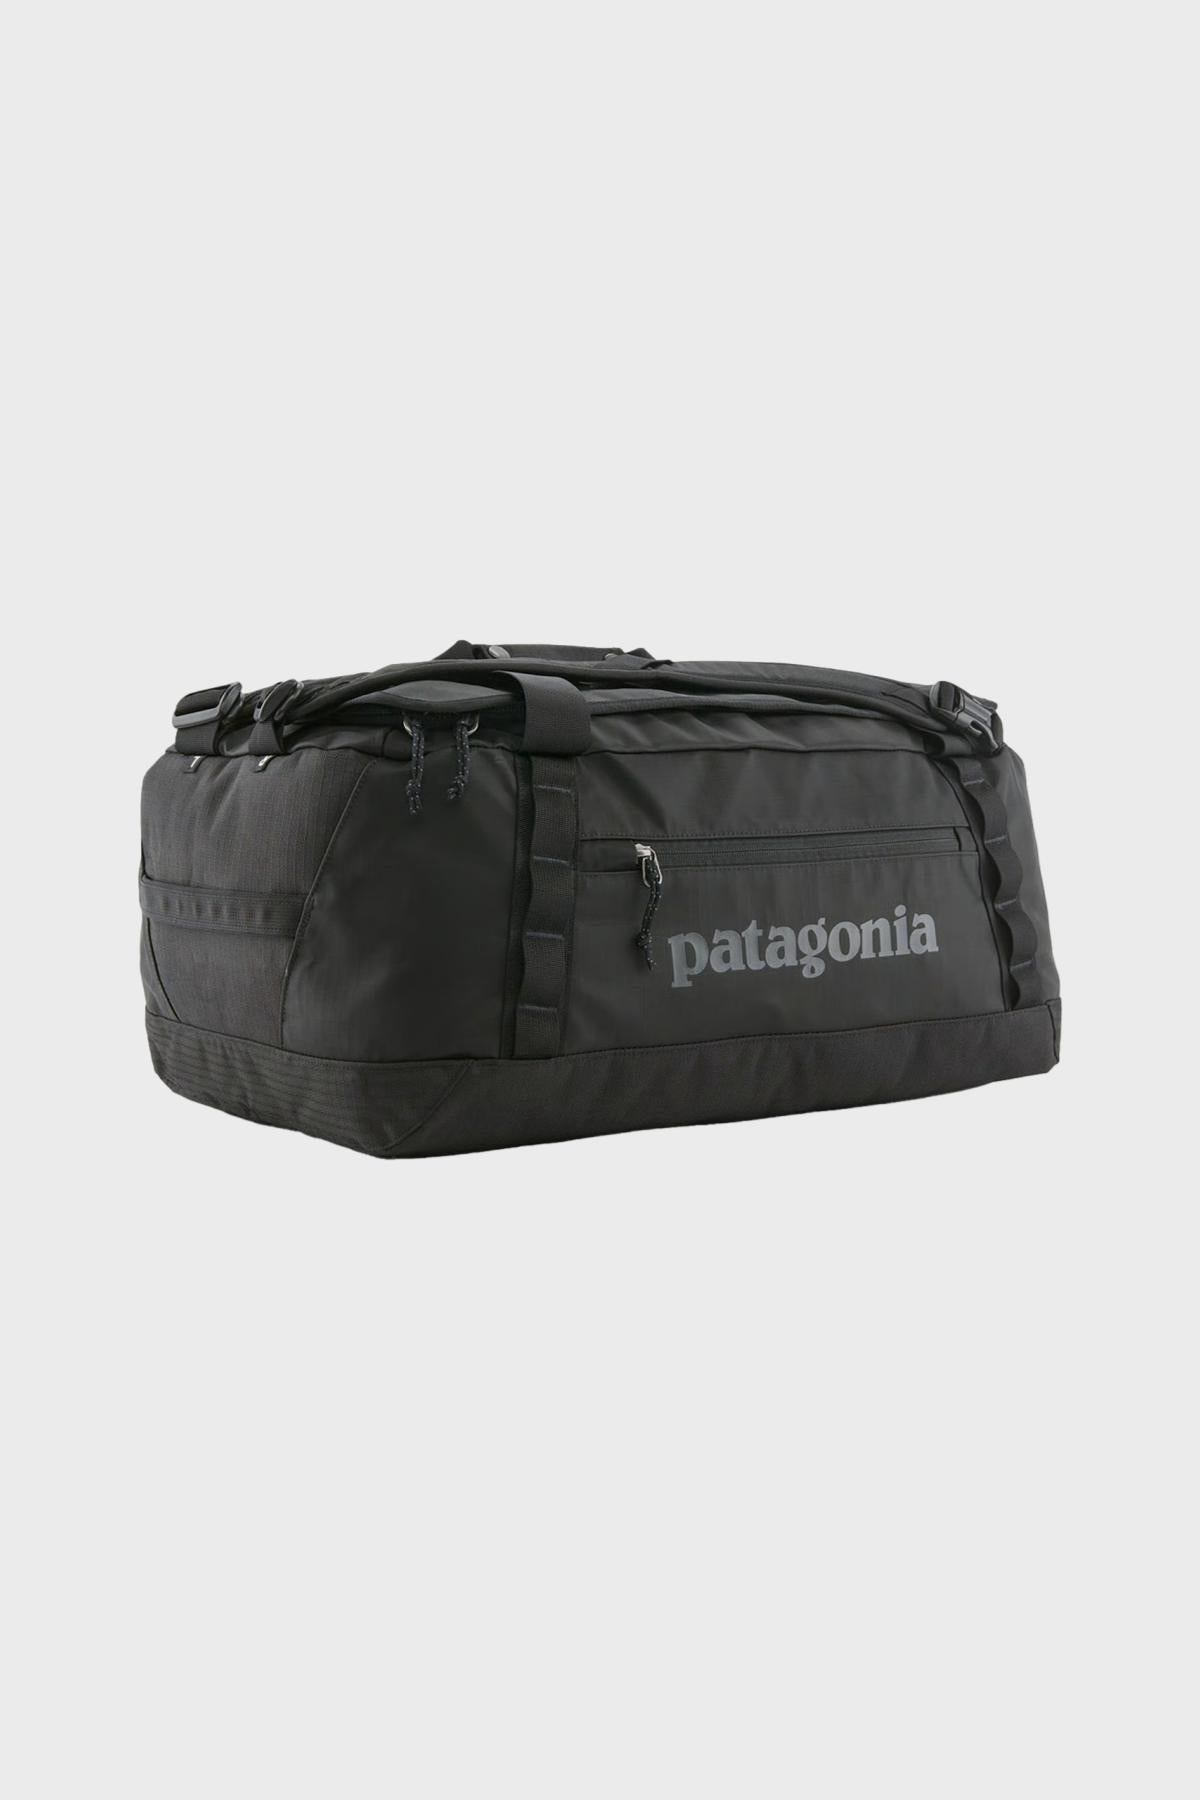 Patagonia - Black Hole Duffel Bag 40L